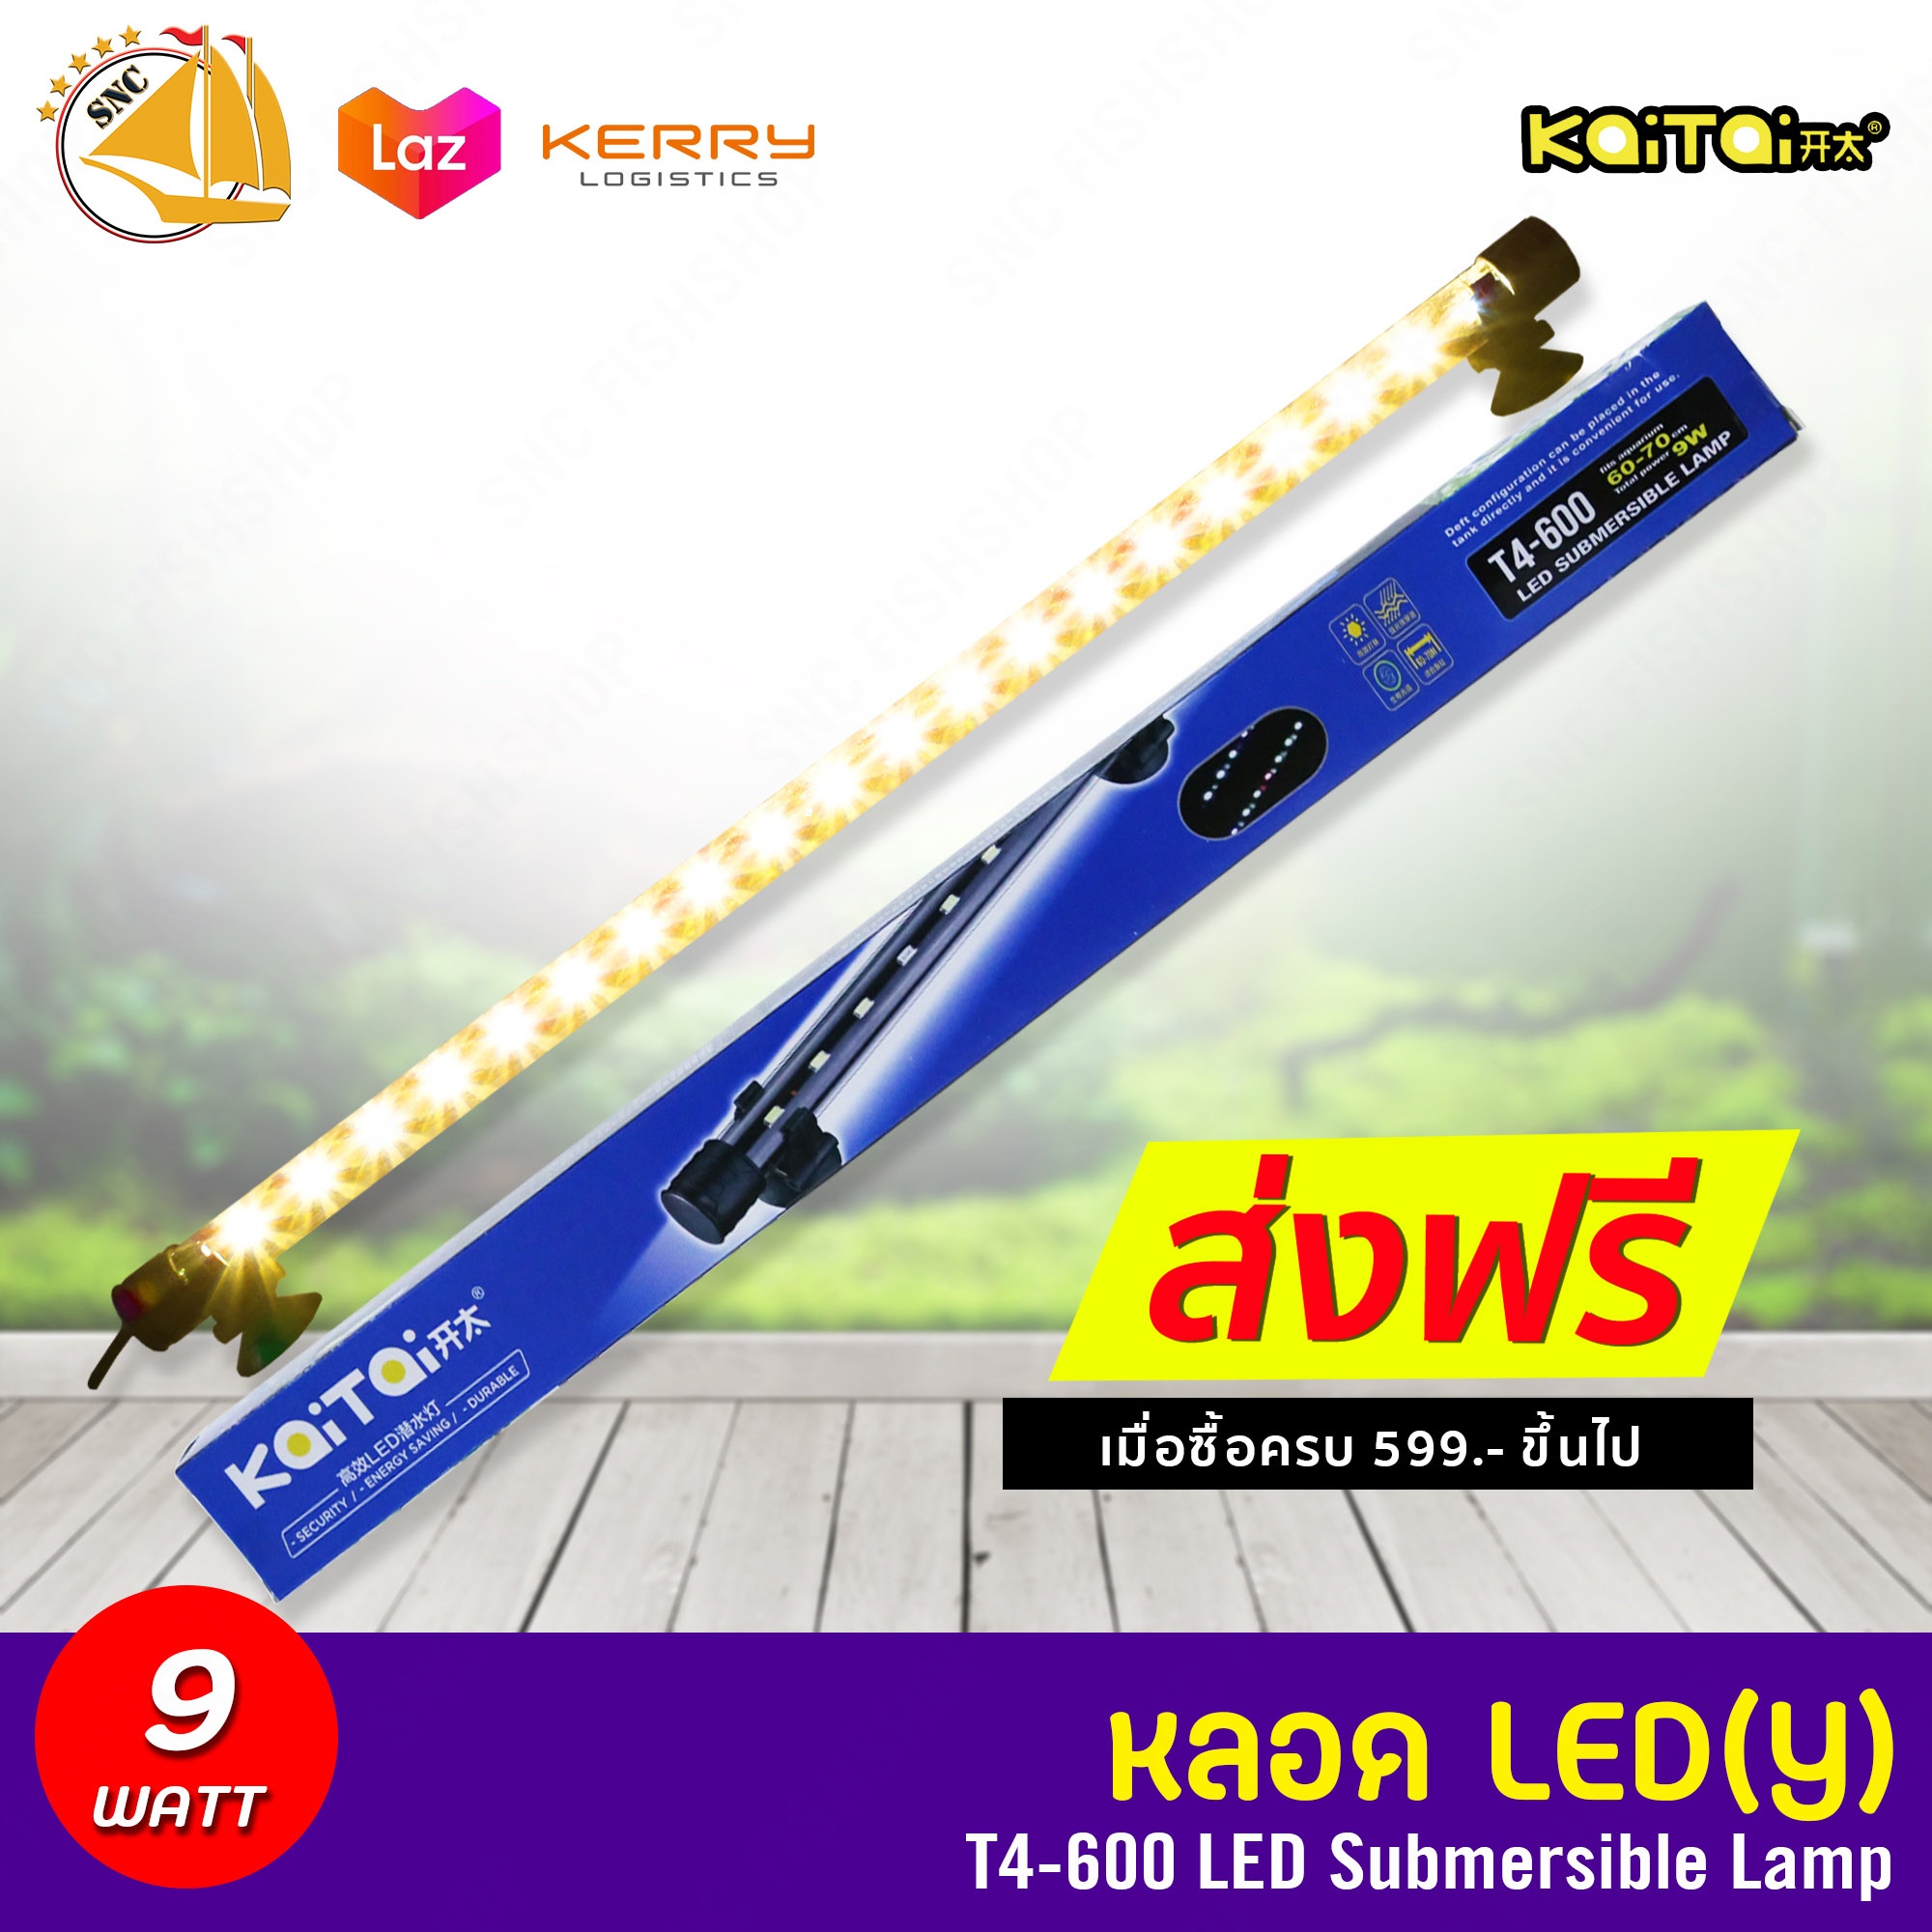 Kaitai LED Electronic Submerged Lamp T4-600 9W ไฟสี Yellow(เหลือง) หลอดไฟใต้น้ำ